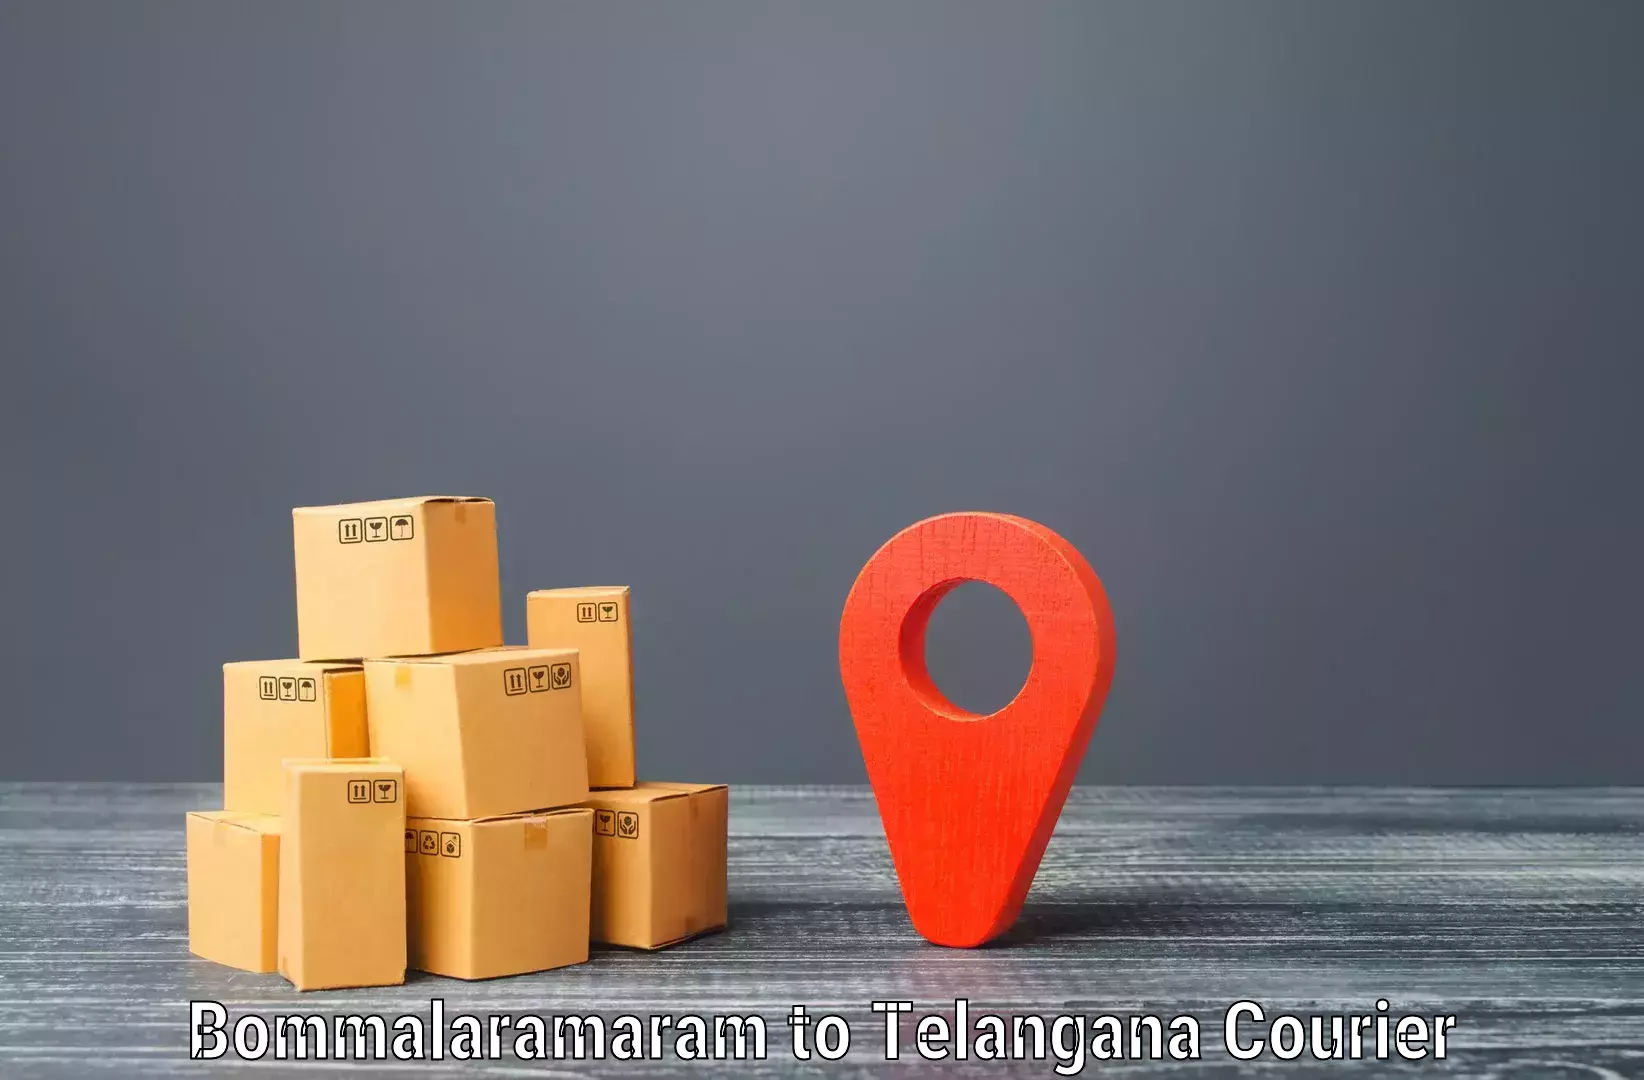 Reliable delivery network in Bommalaramaram to Madhavaram